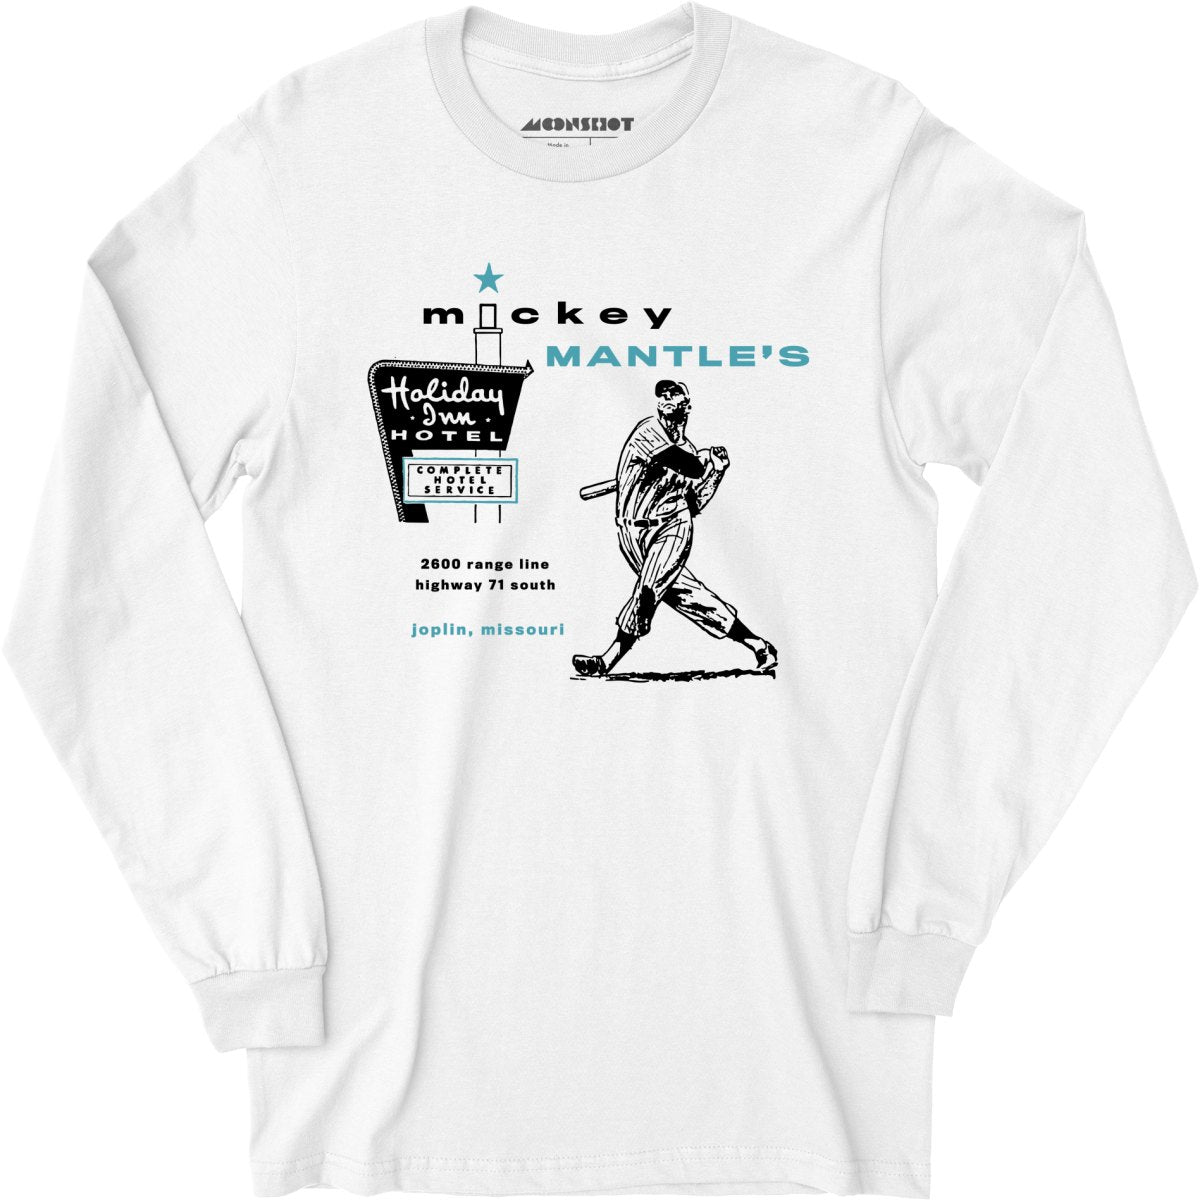 Mickey Mantle's Holiday Inn - Joplin, MO - Vintage Hotel - Long Sleeve T-Shirt